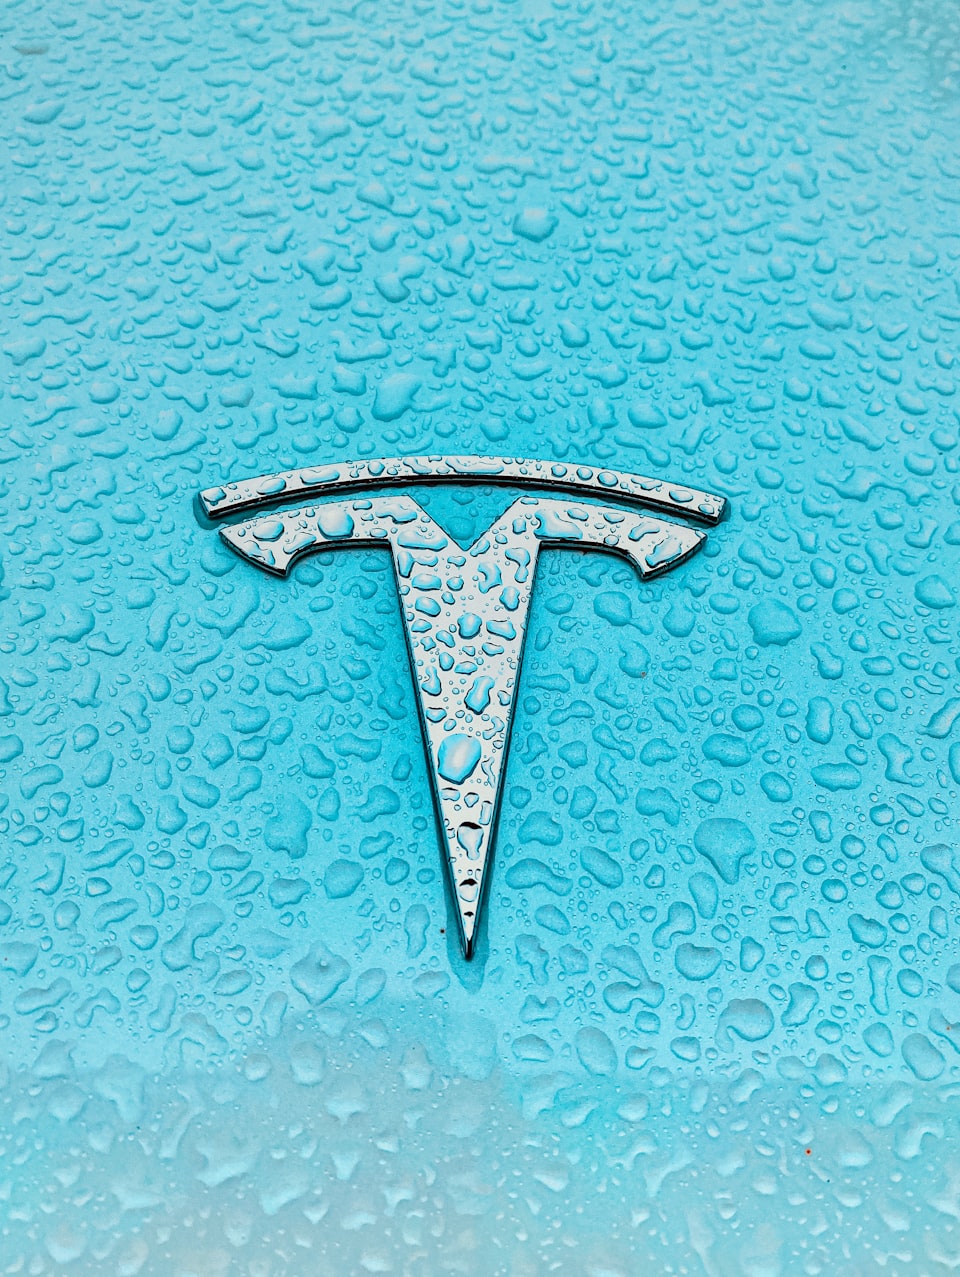 via Twitter: Sign of Future Problems at Tesla (TSLA)?